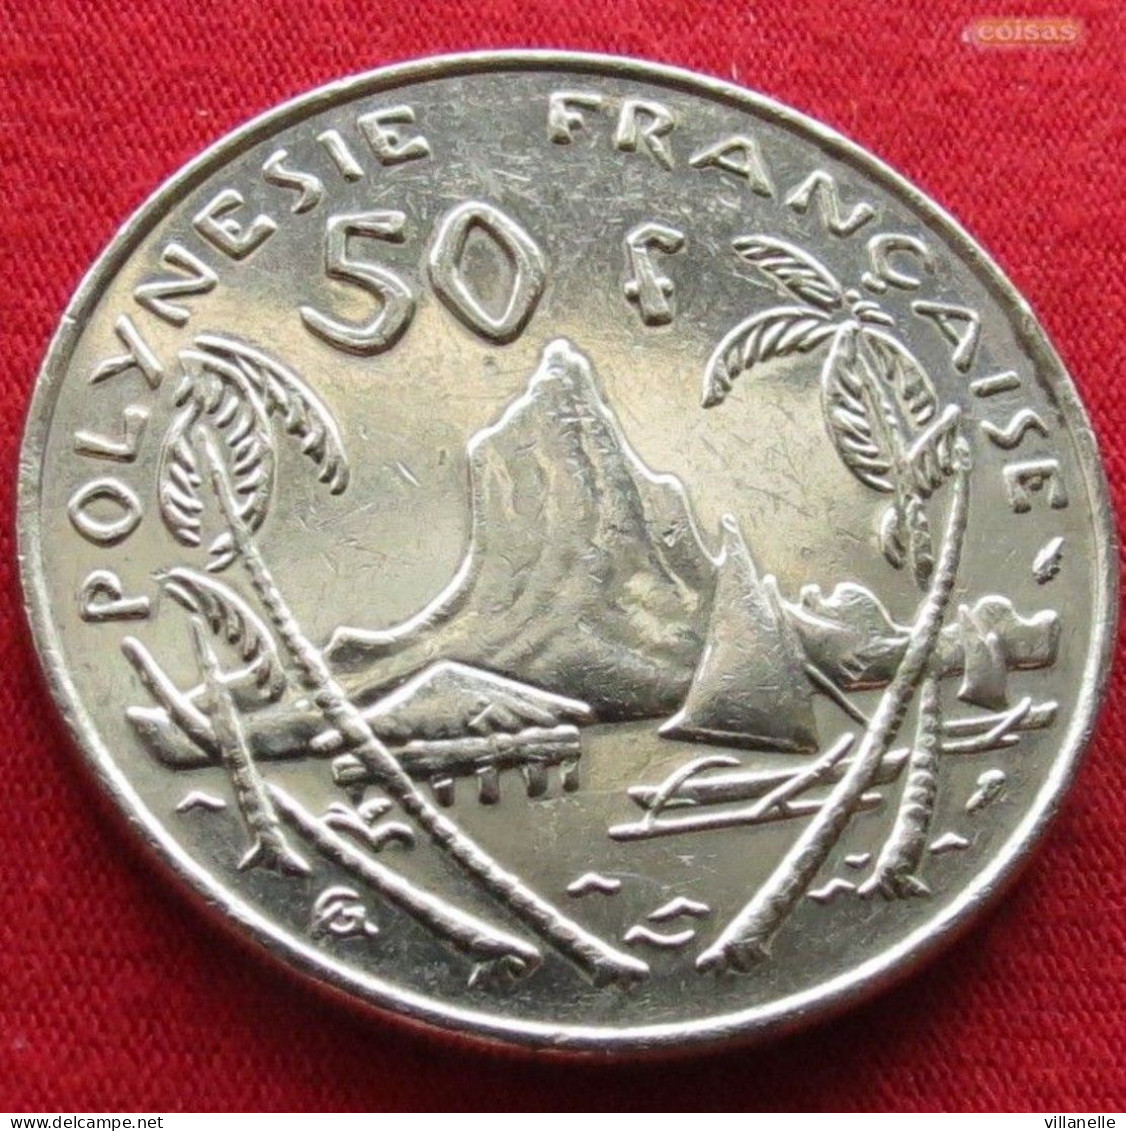 French Polynesia 50 Francs 1988 KM# 13 *V1T Polynesie Polinesia - French Polynesia